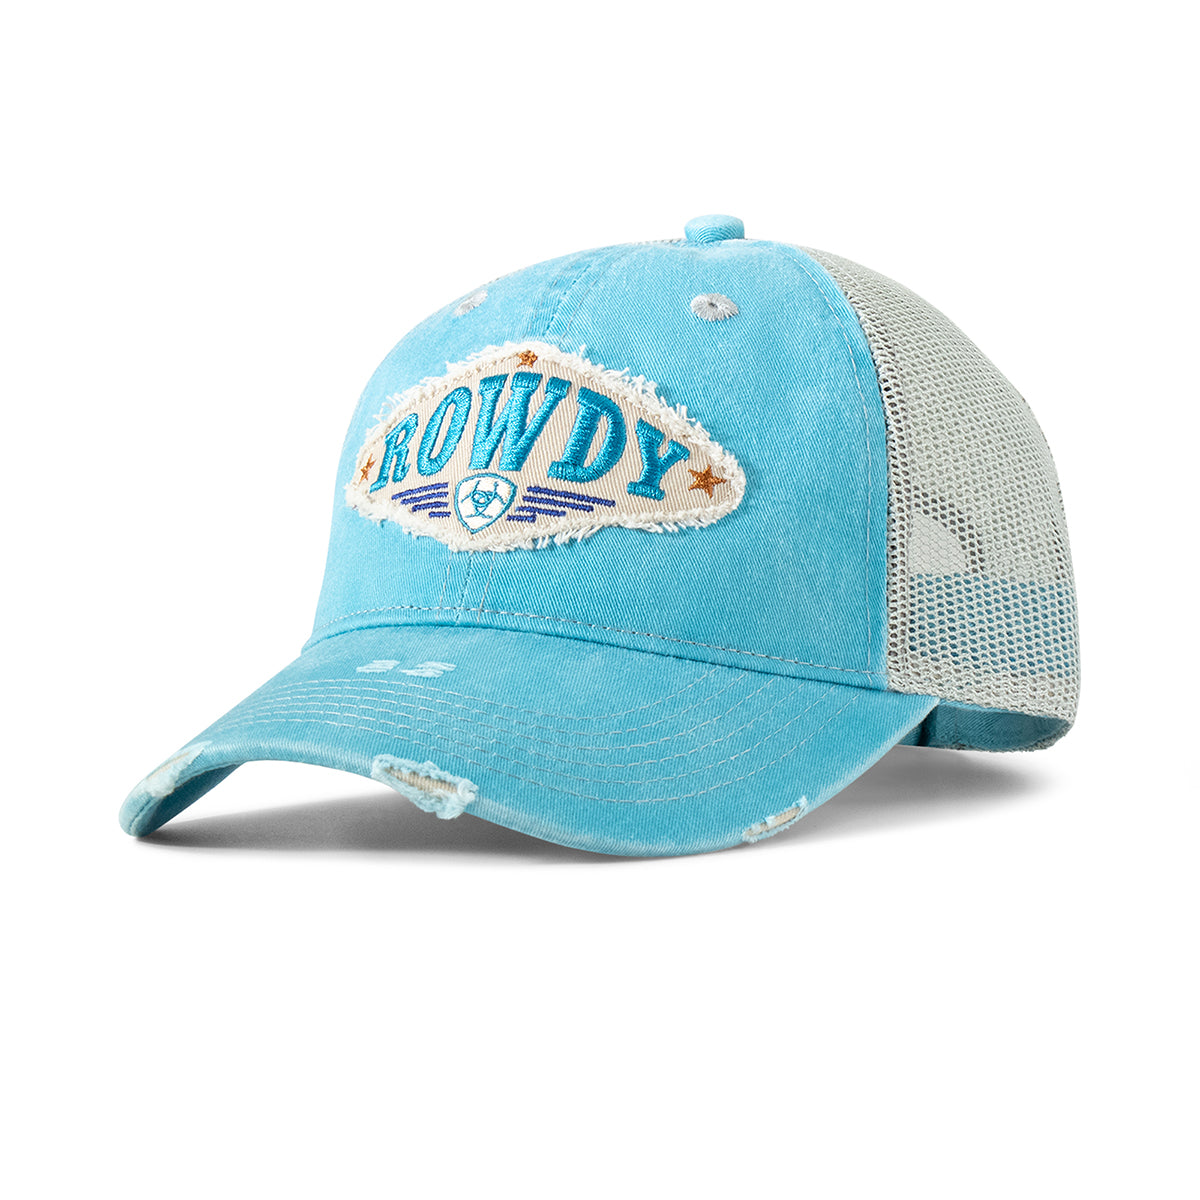 Ariat Women's Rowdy Distressed Snapback Cap - Blue